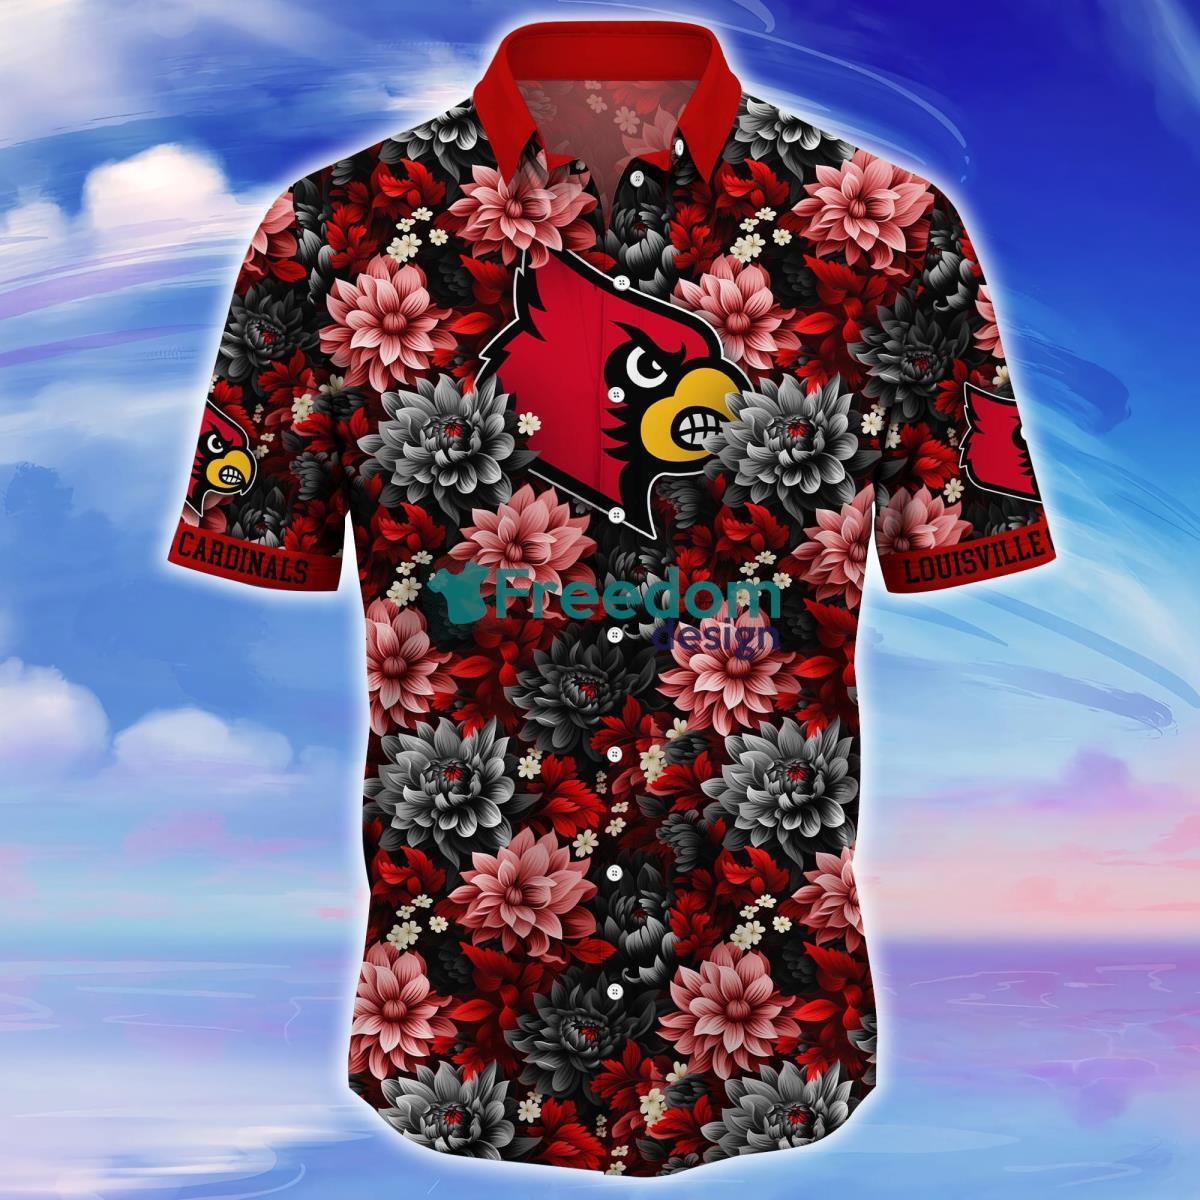 Louisville Cardinals Trending Hawaiian Shirt Great Gift For Fans -  Freedomdesign